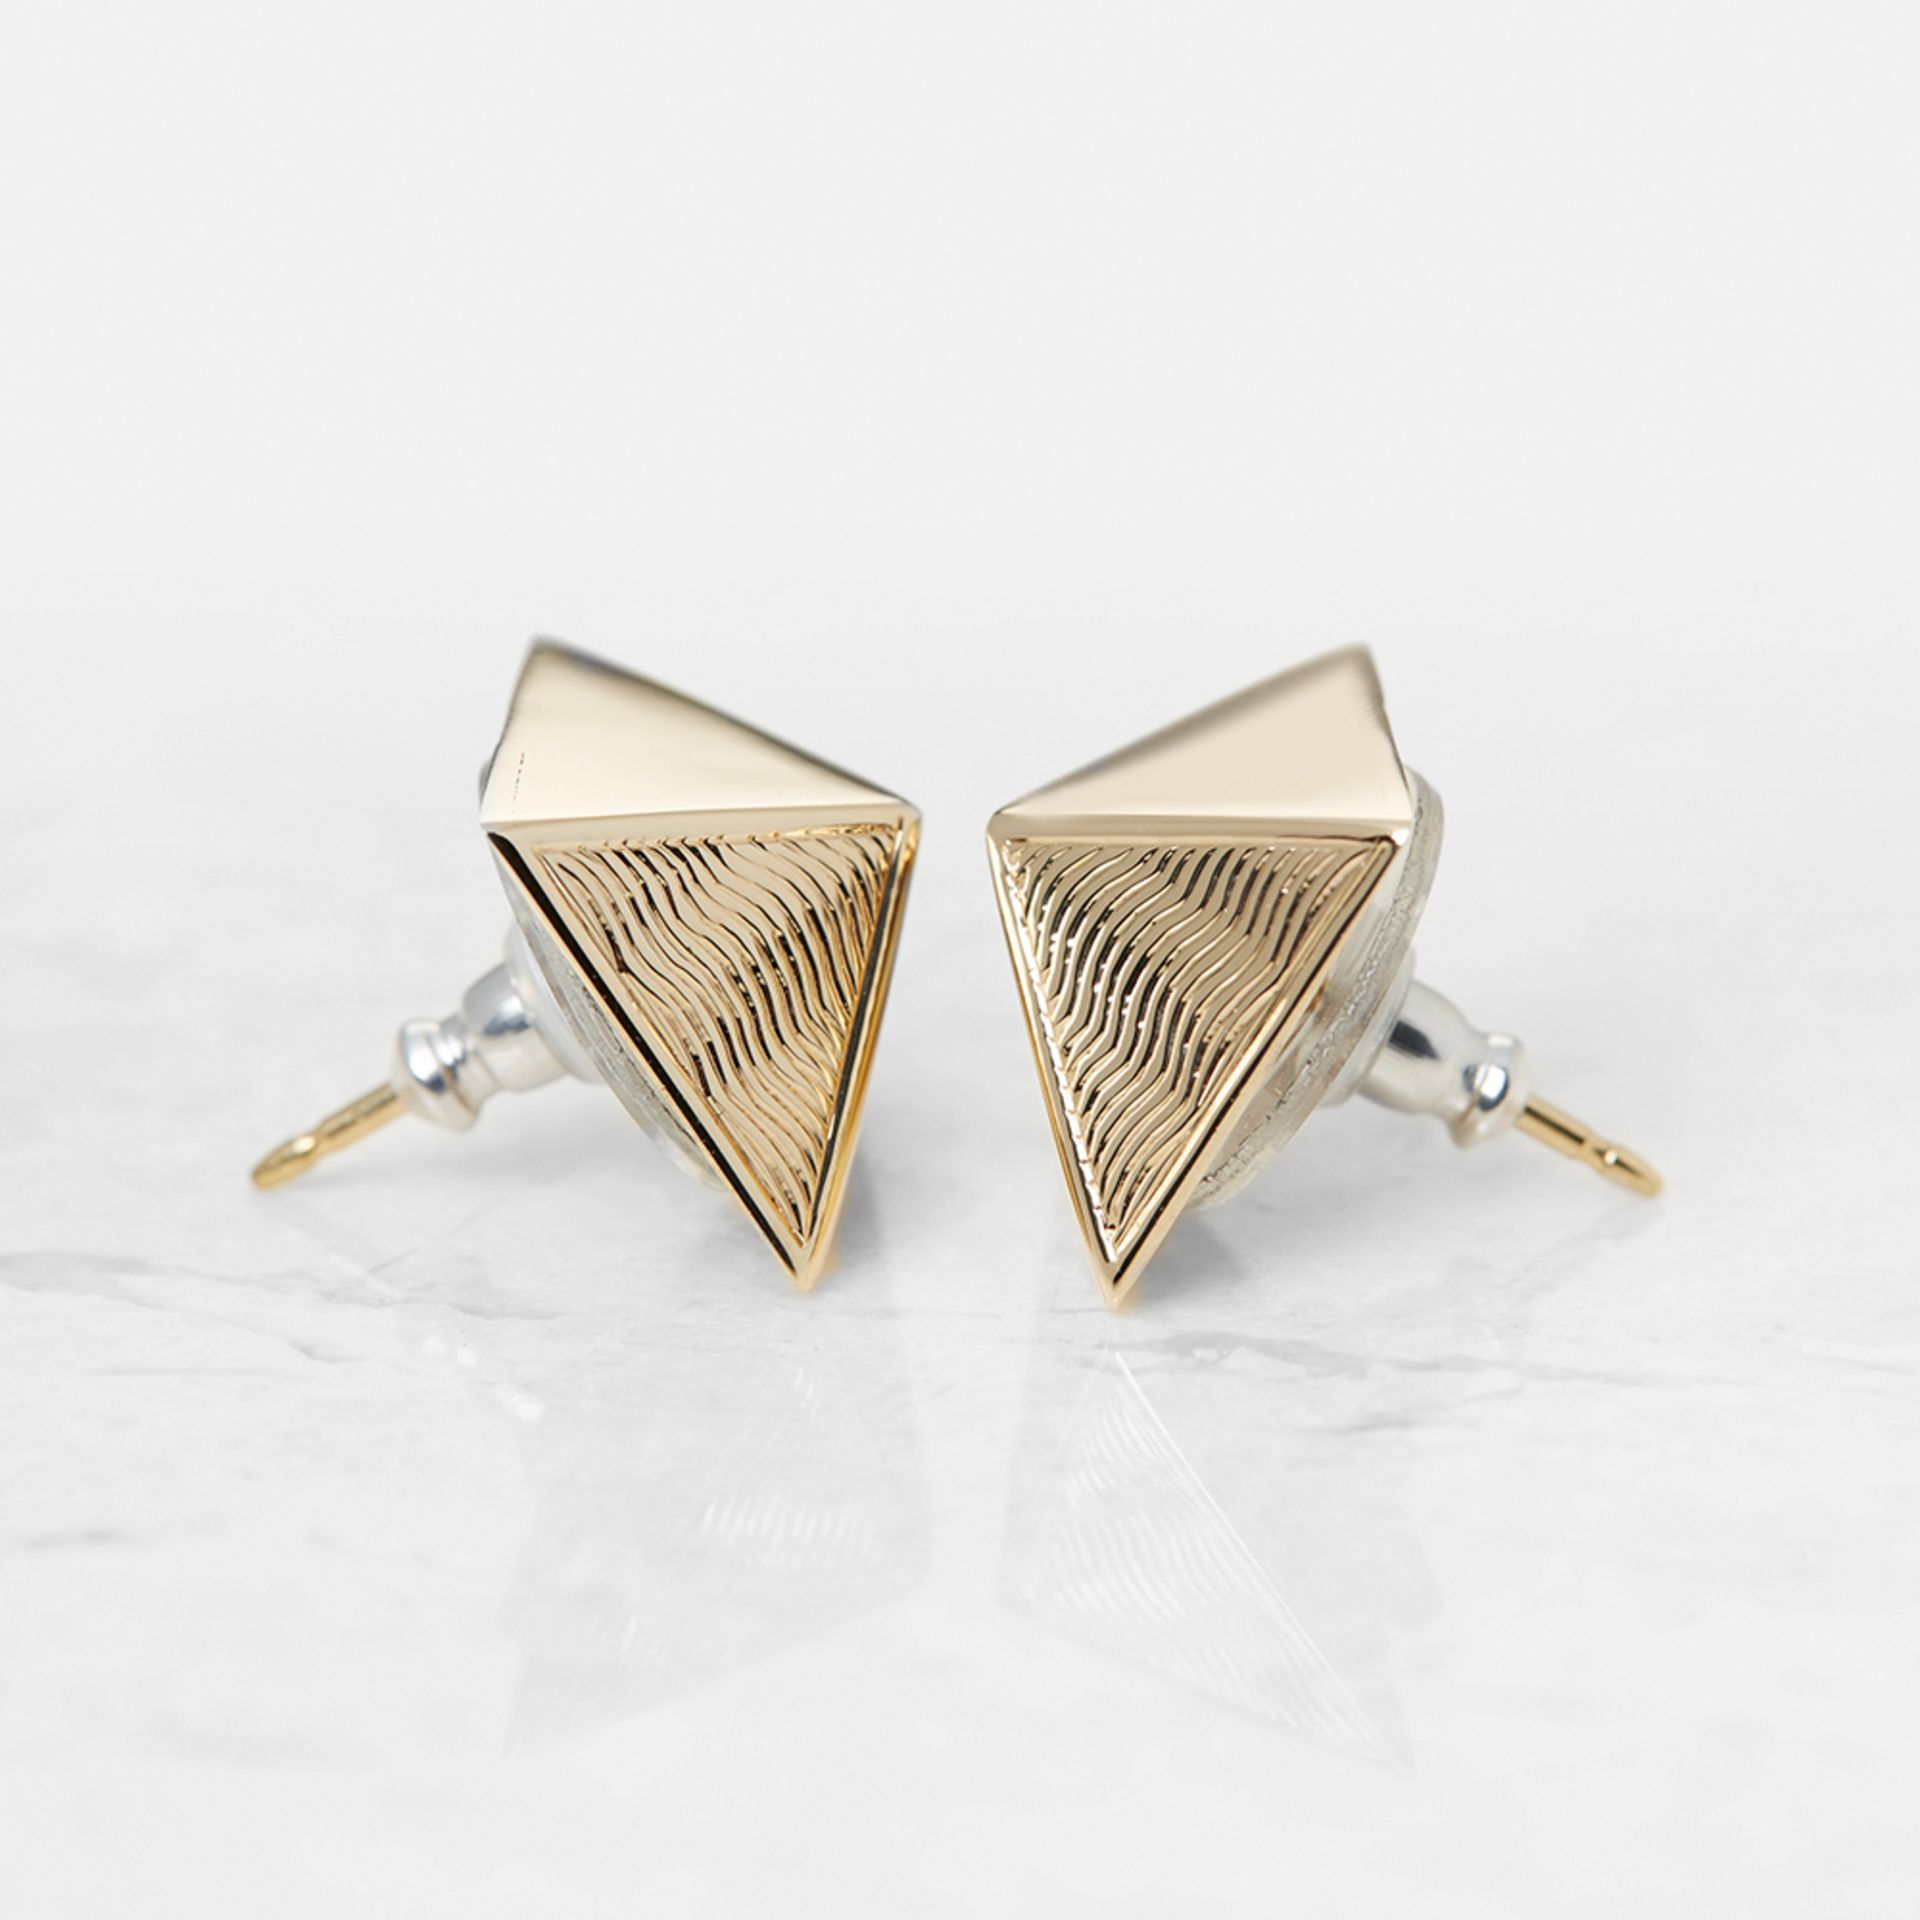 Van Cleef & Arpels 18k Yellow Gold Pyramid Style Earrings - Image 2 of 7